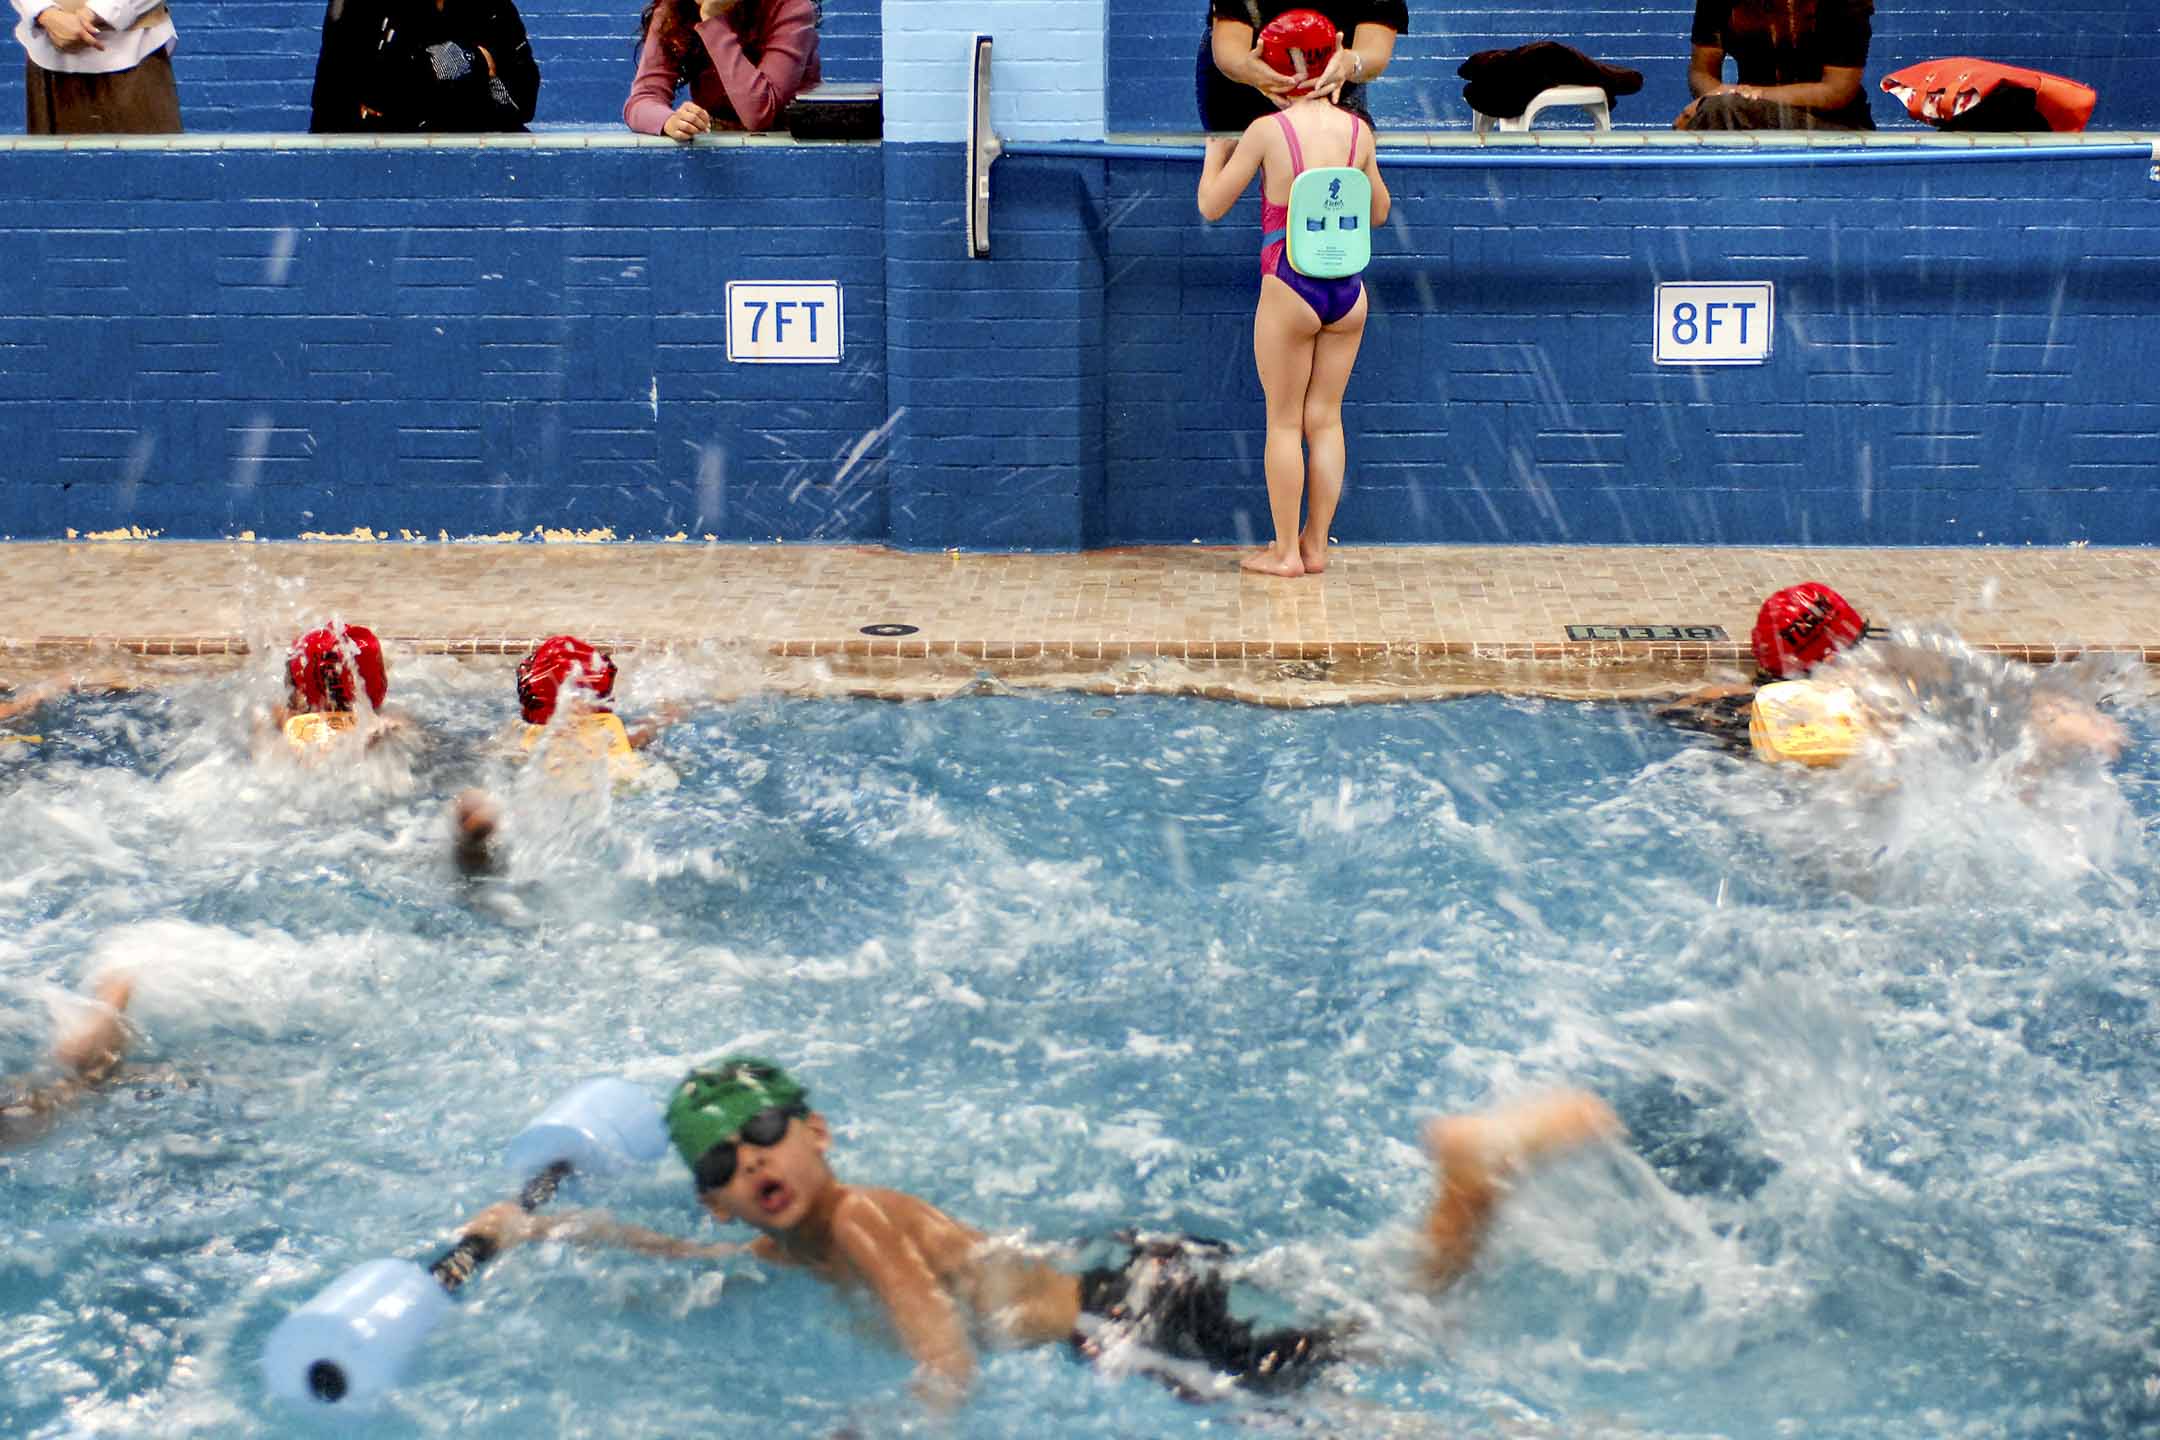 美国，母亲们在泳池边观看孩子们学习游泳。摄：David Handschuh/NY Daily News Archive via Getty Images